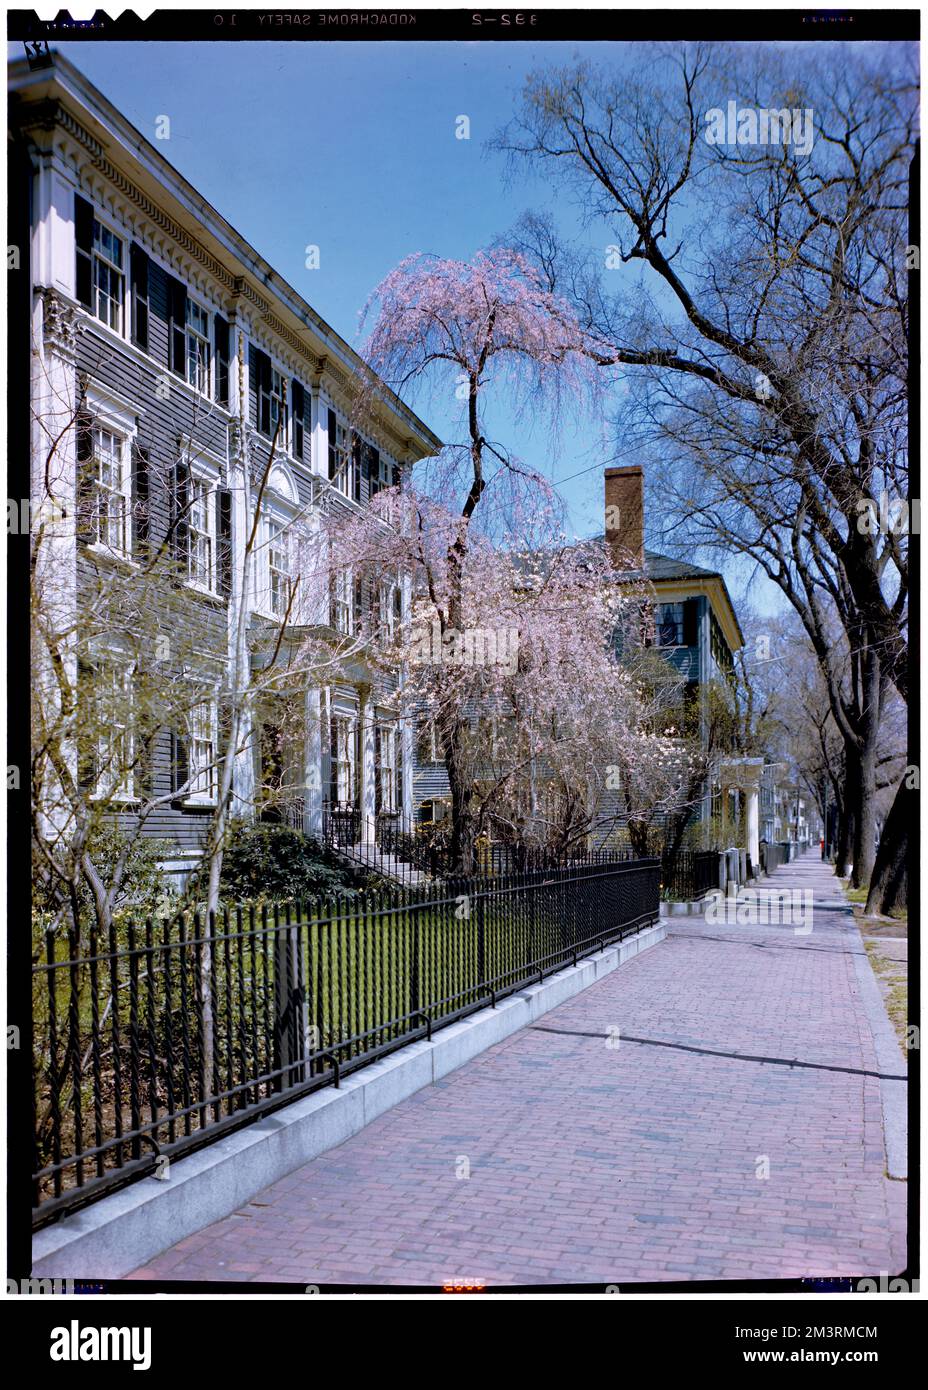 Salem, Chestnut Street, spring , Architecture, Dwellings, Fences, Sidewalks. Samuel Chamberlain Photograph Negatives Collection Stock Photo